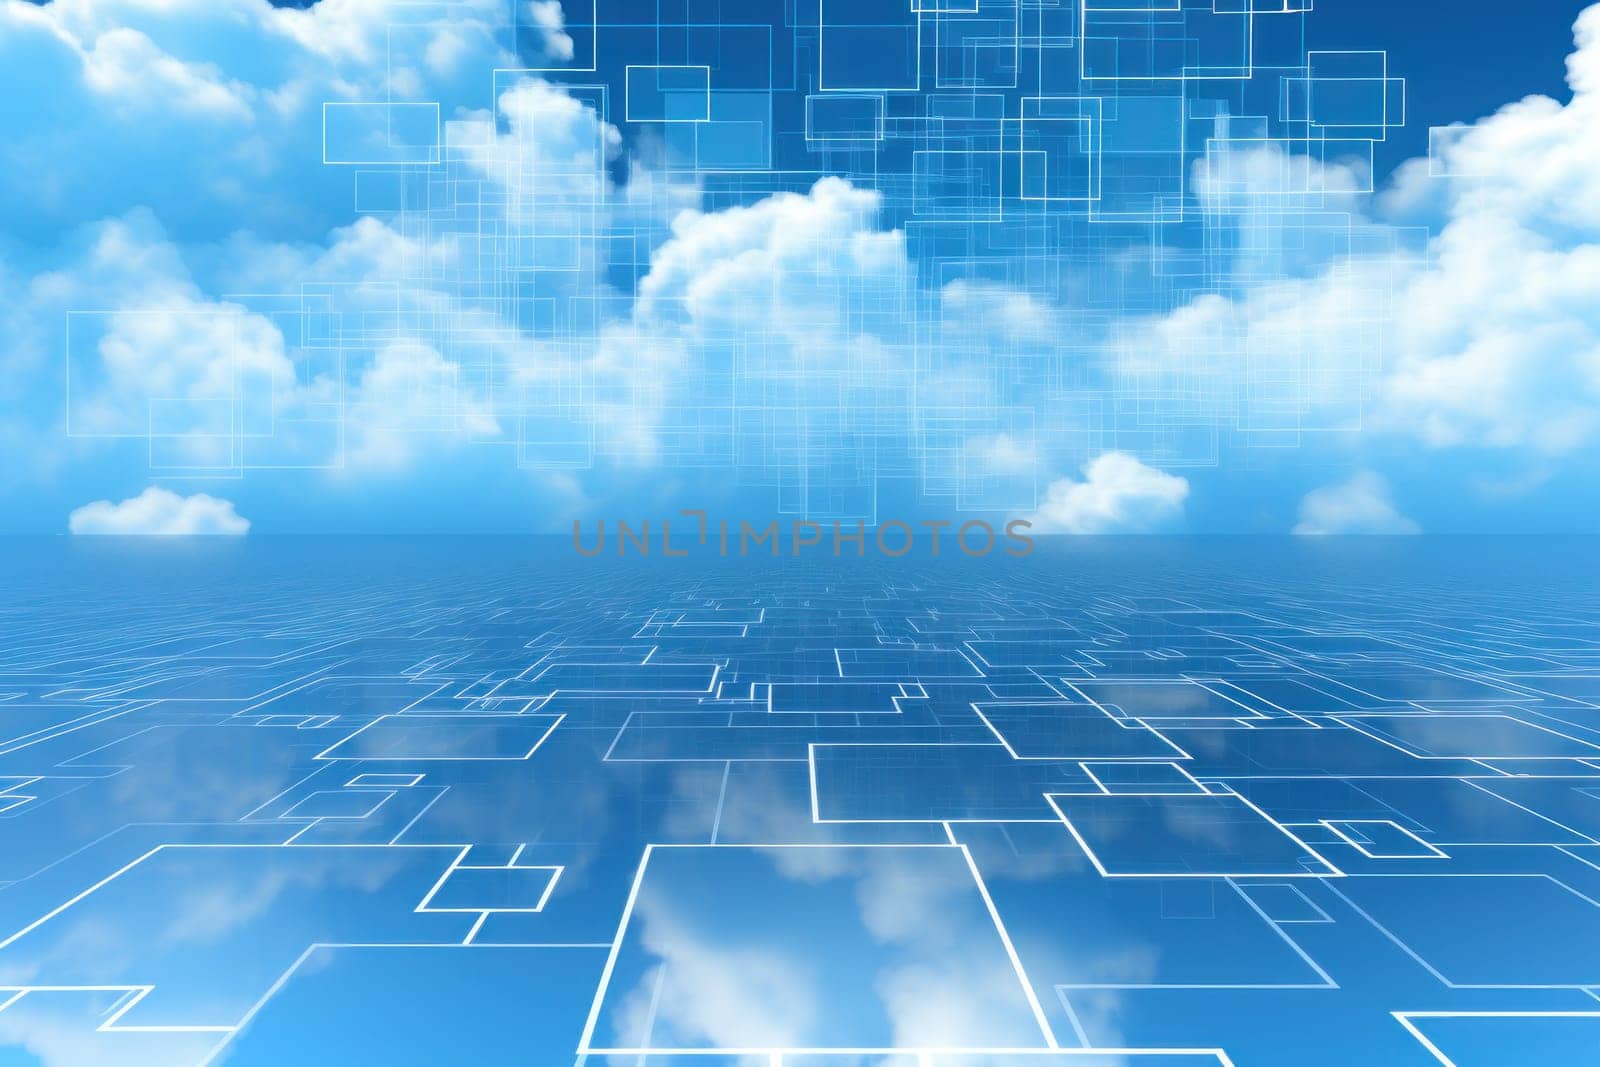 Digital matrix theme light blue sky and clouds backgrounds by nijieimu